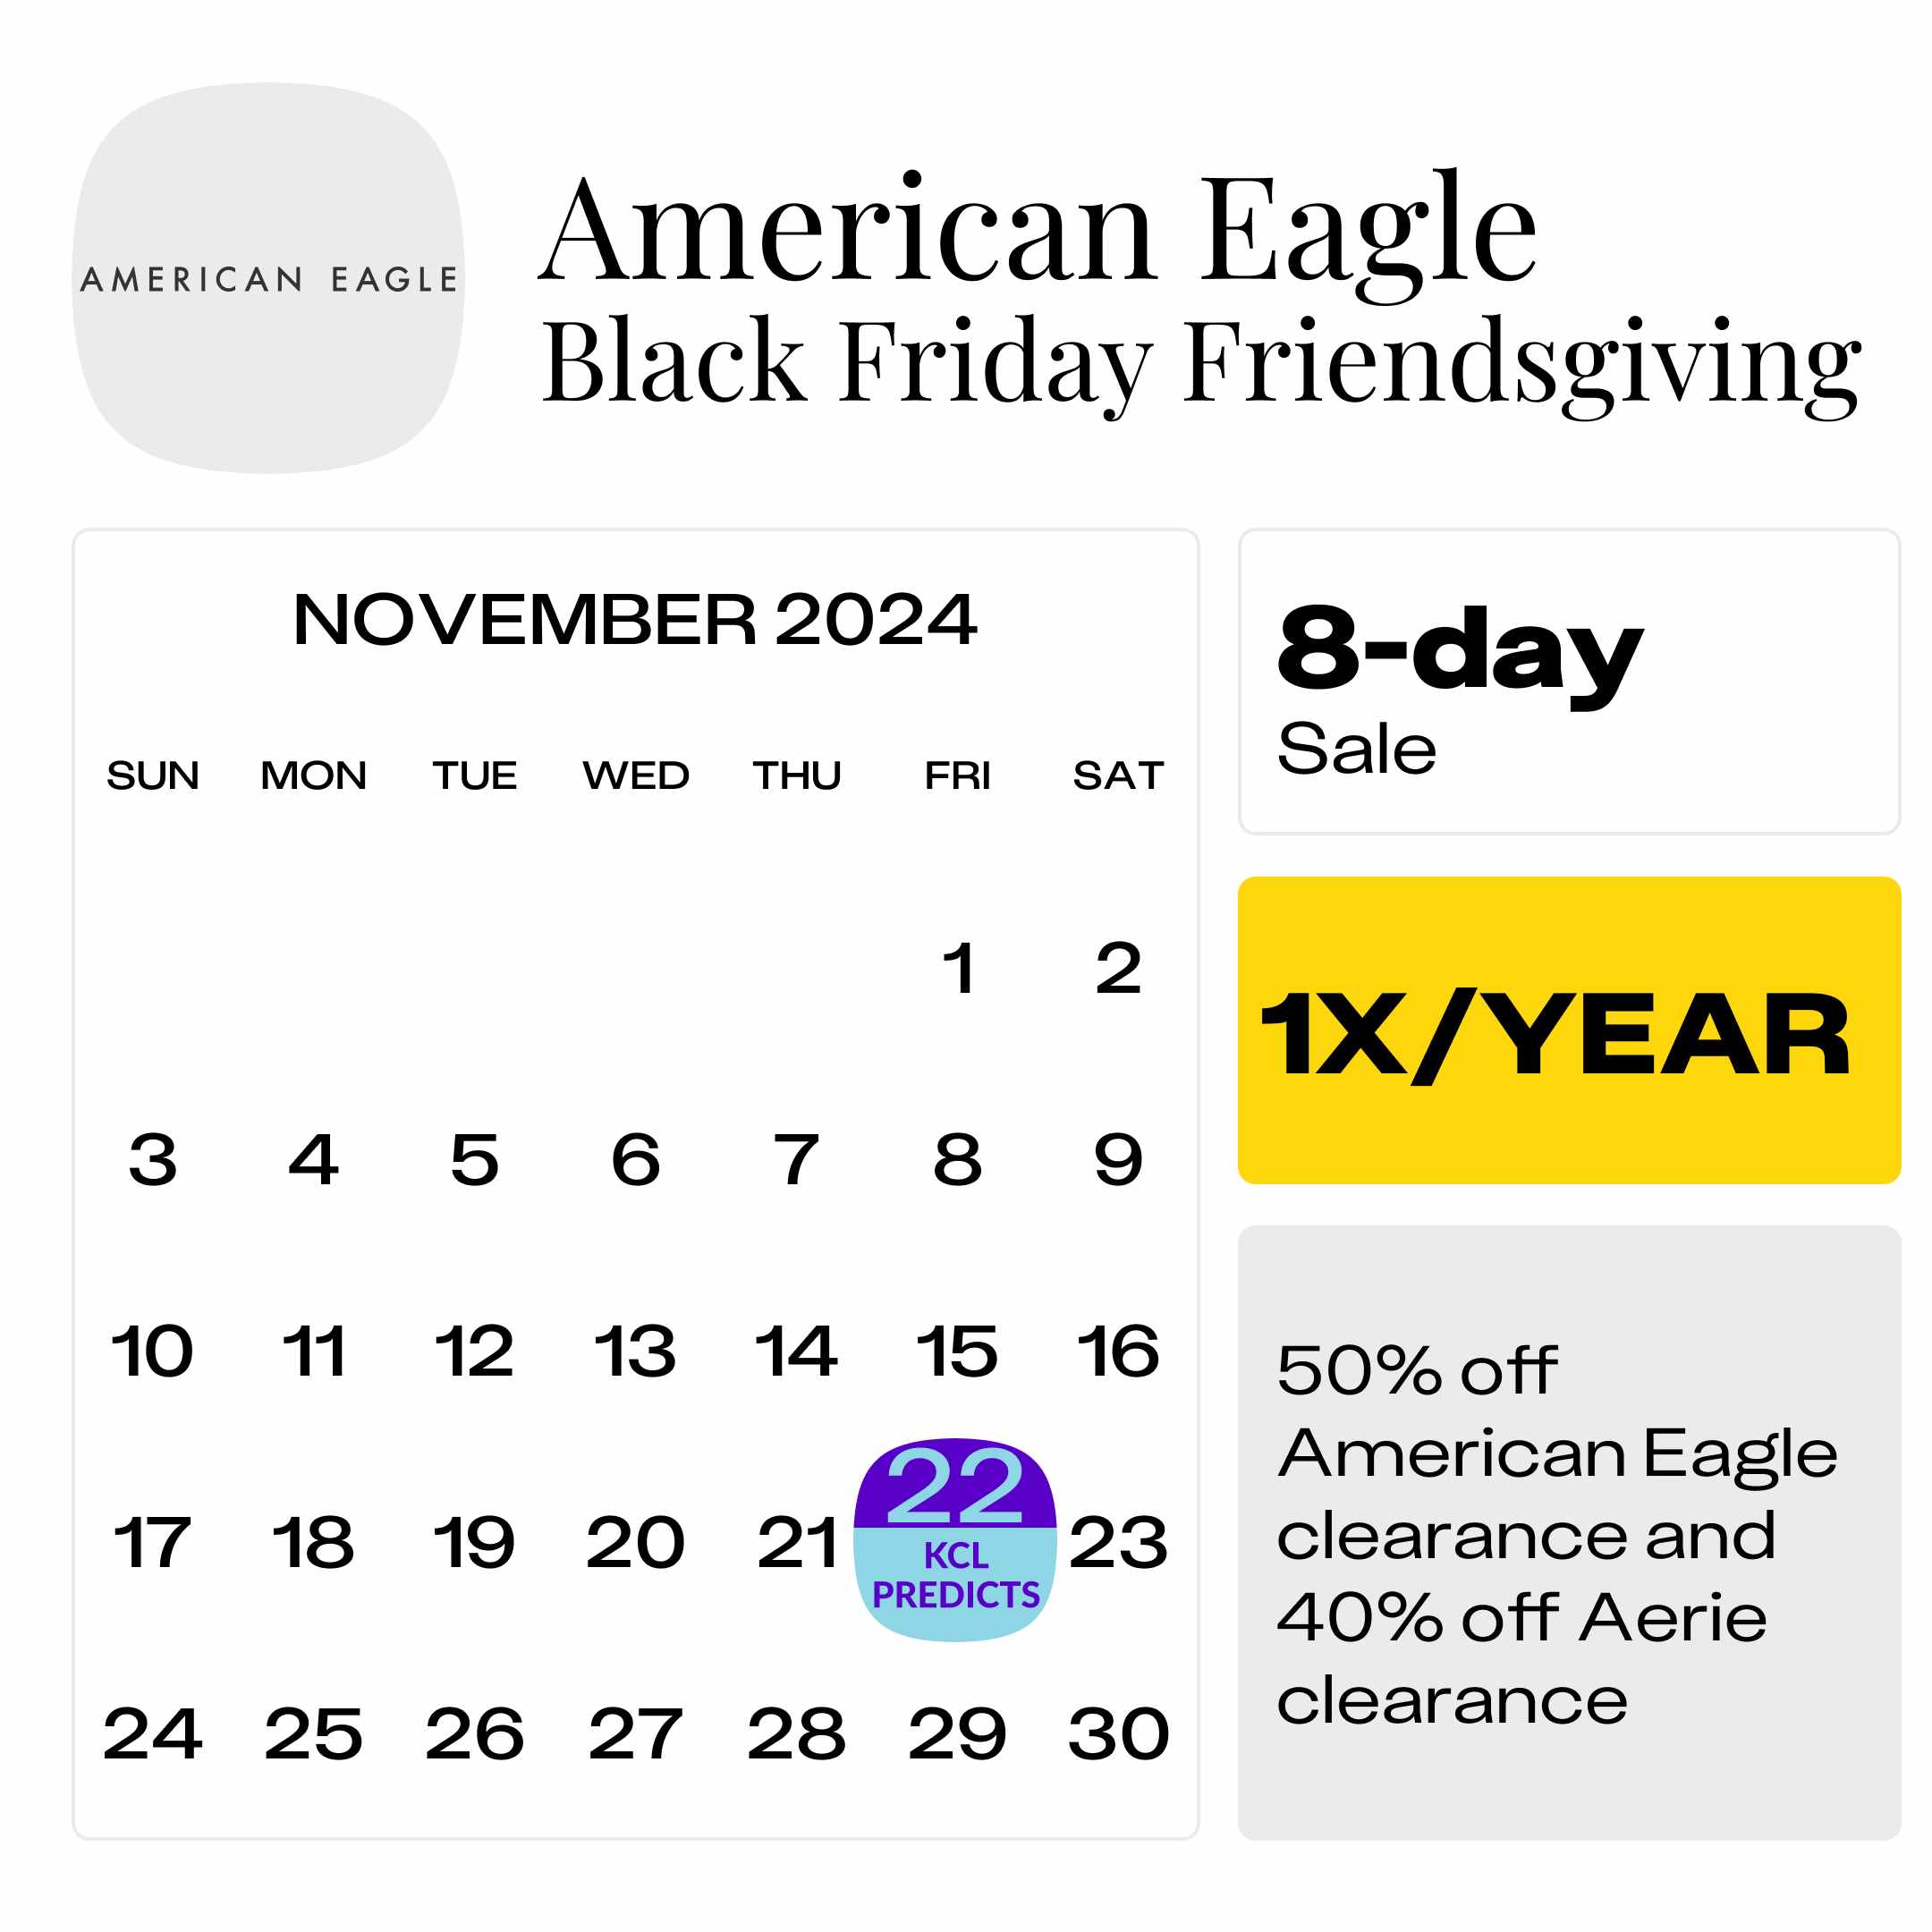 American-Eagle-Black-Friday-Friendsgiving